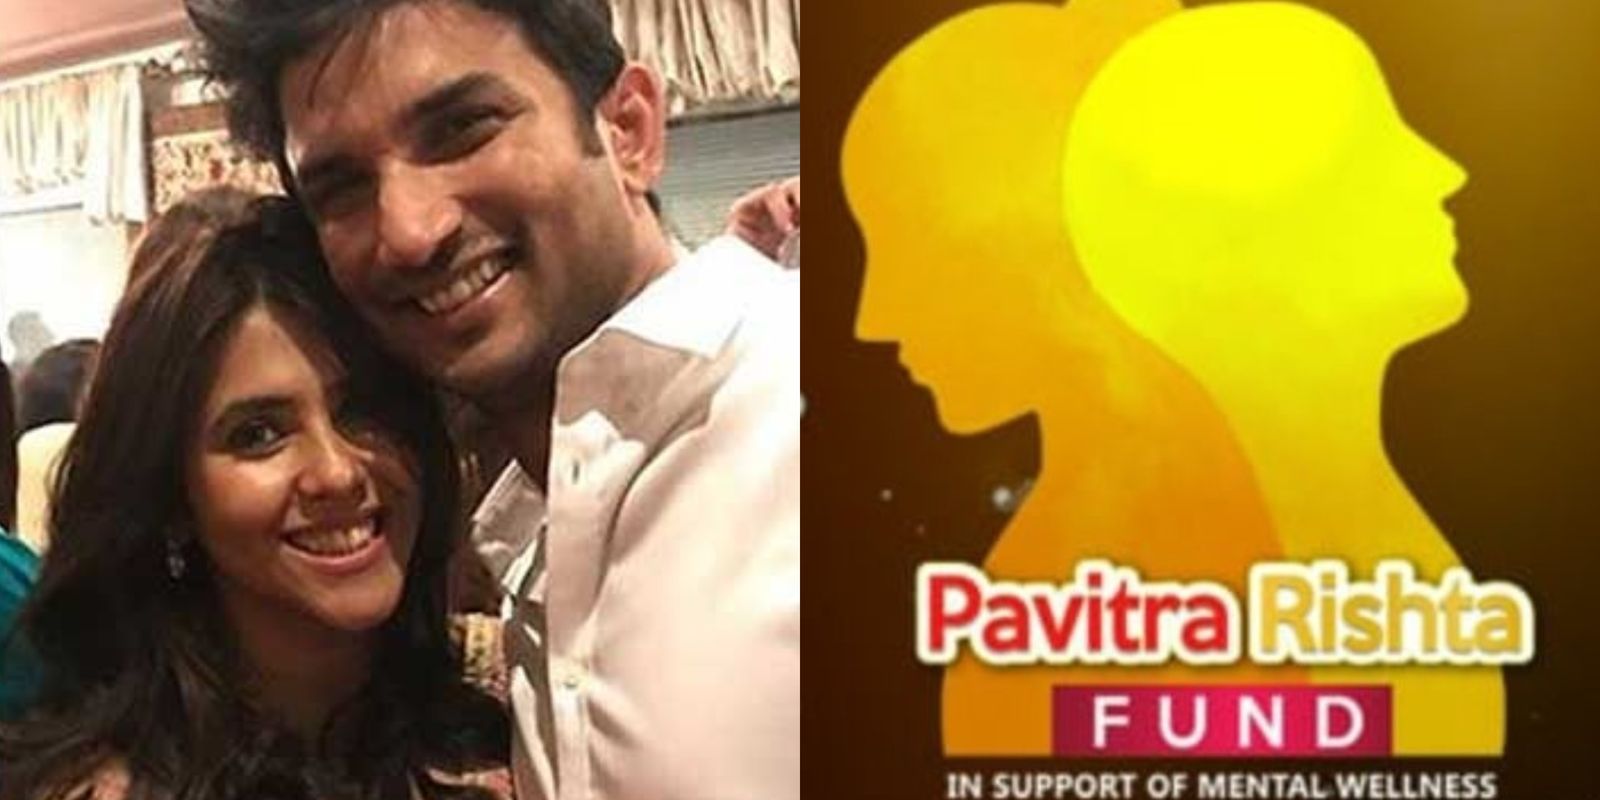 Ekta Kapoor Dissociates Herself From Pavitra Rishta Fund After Being Trolled By Sushant Singh Rajput’s Fans